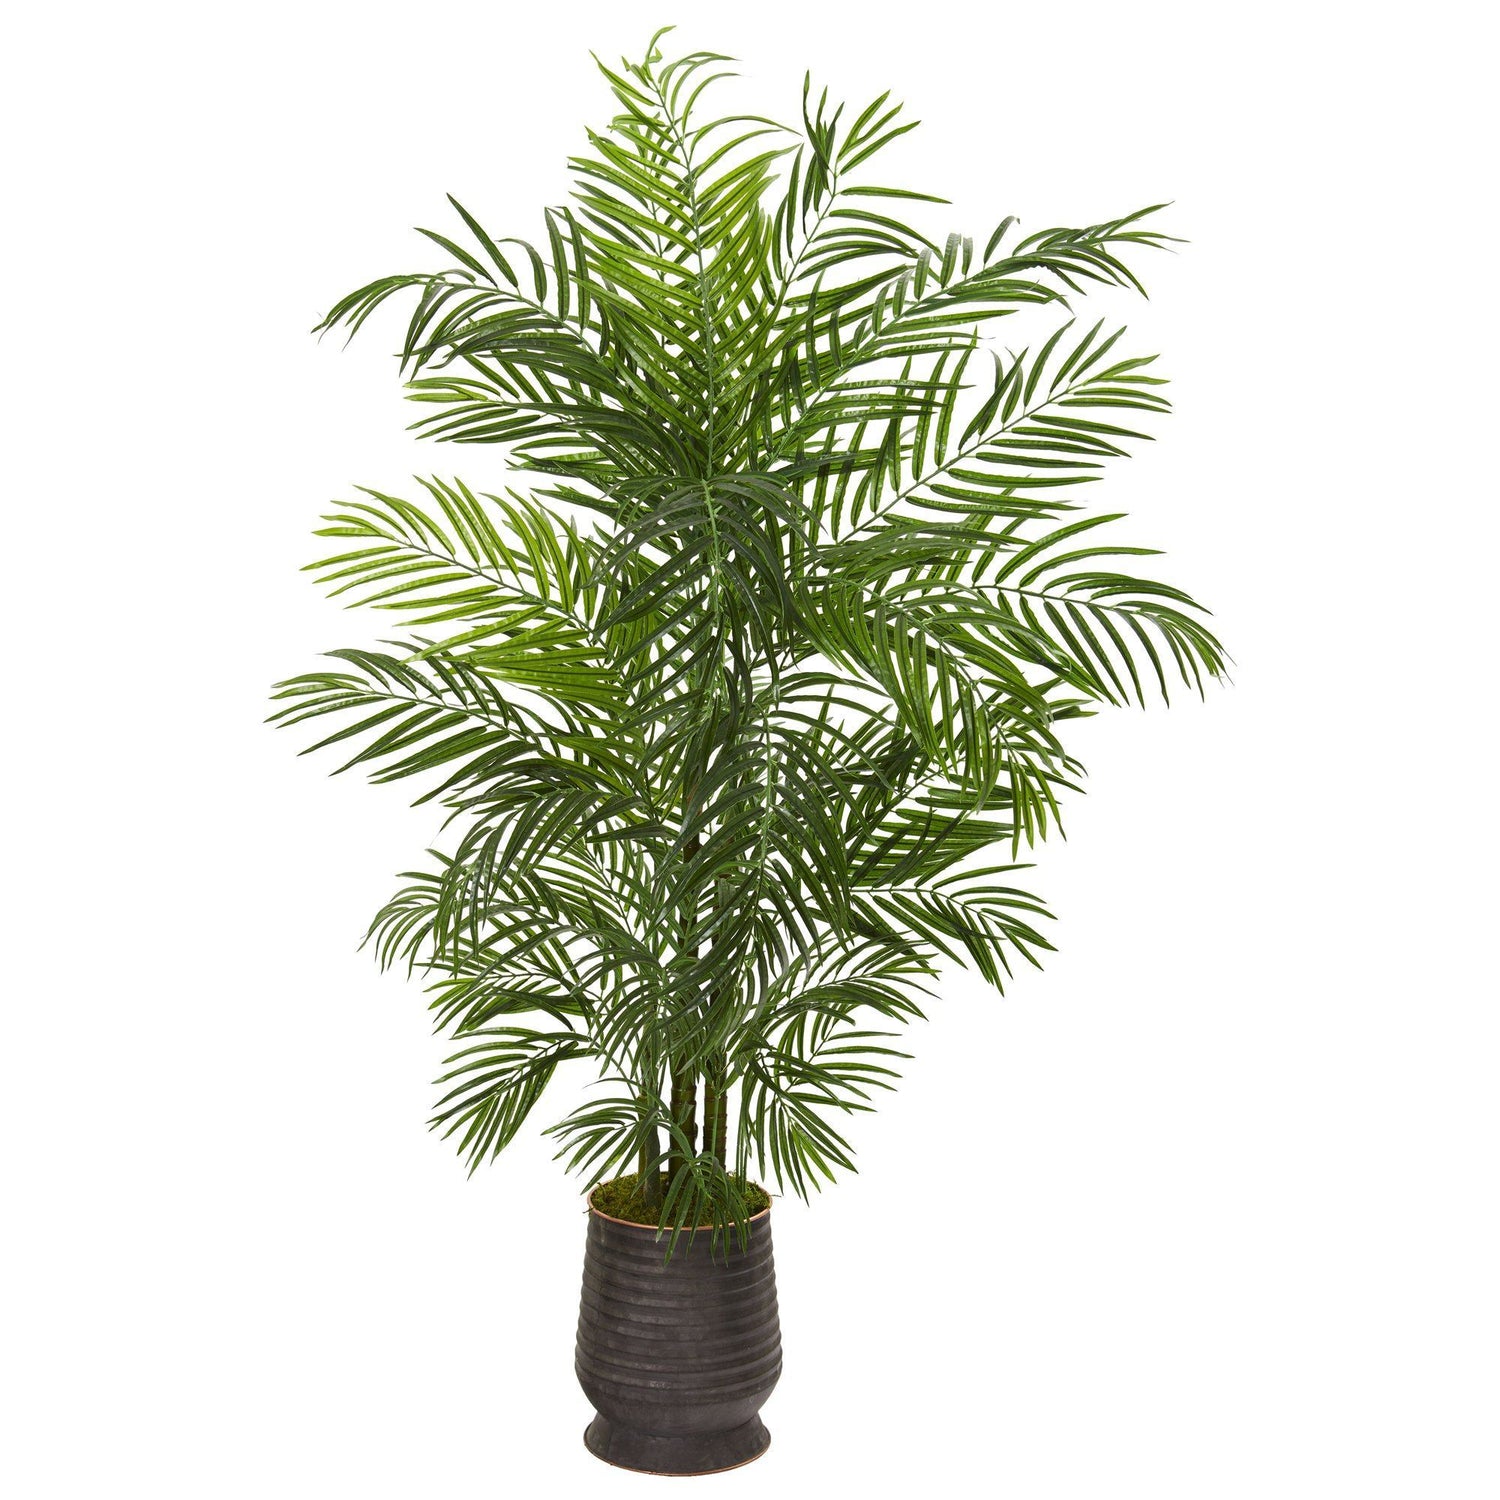 65” Areca Artificial Palm Tree in Decorative Planter(Indoor/Outdoor)